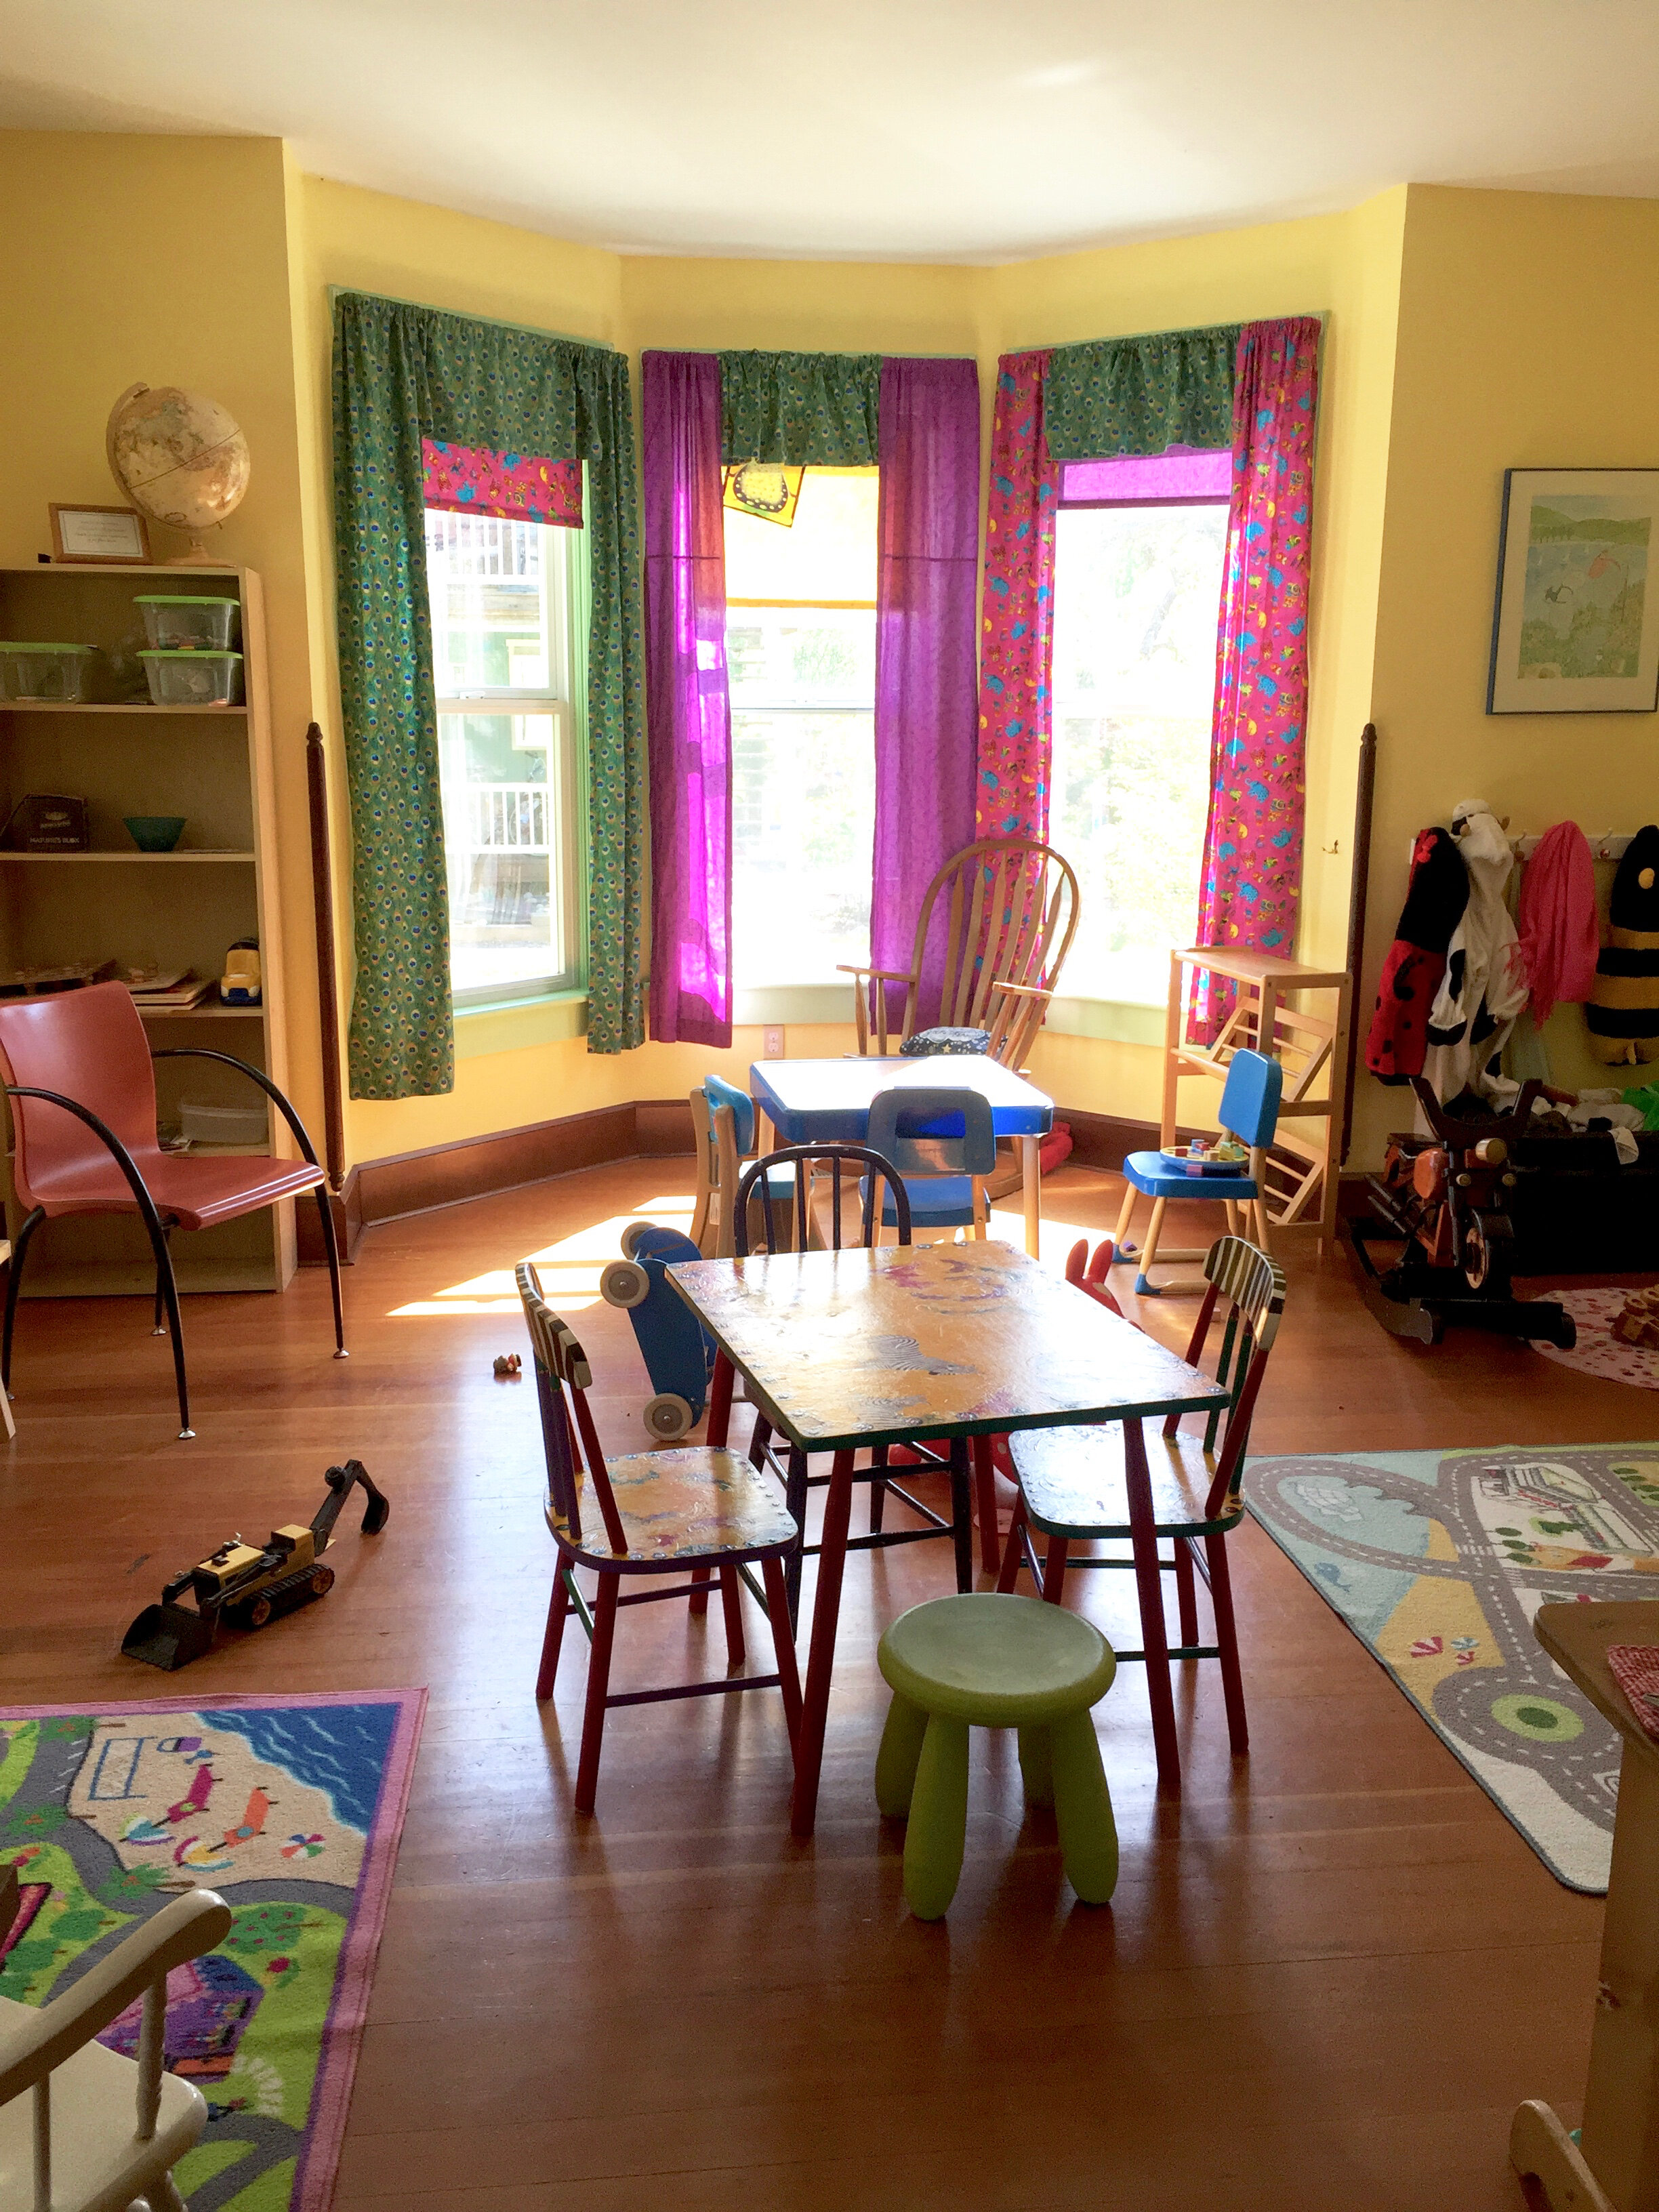 Example of indoor kids' playroom